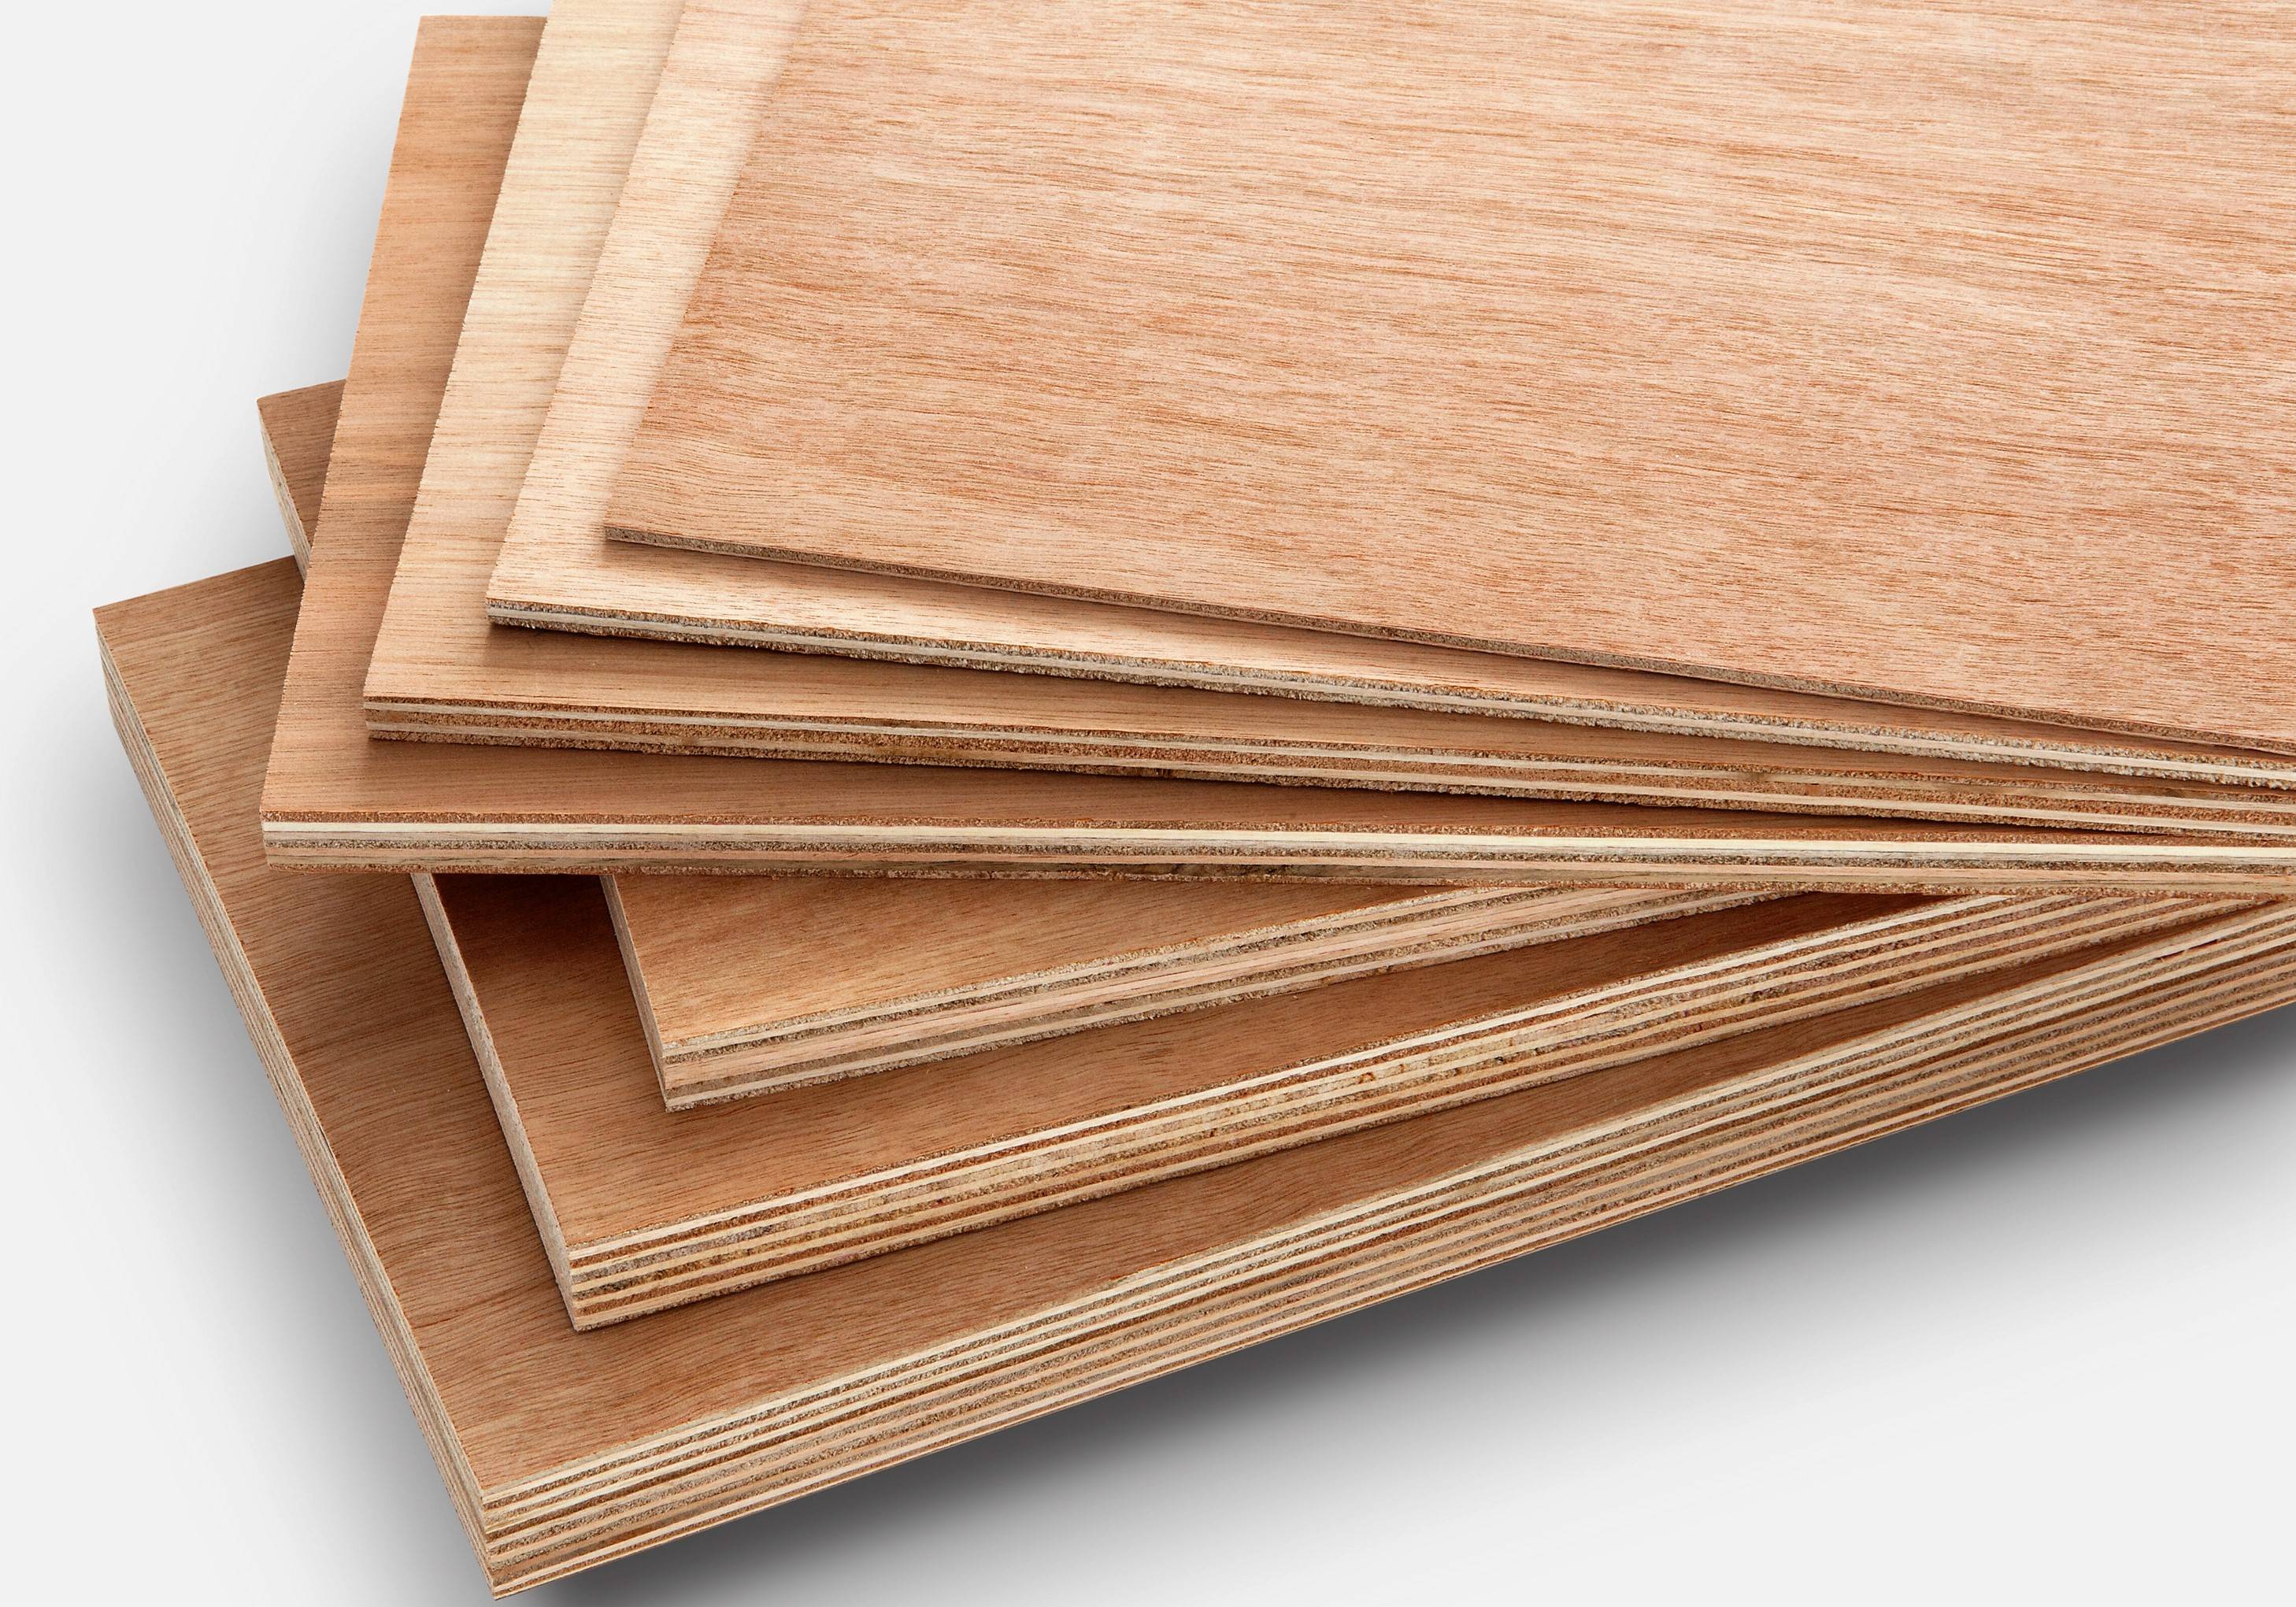 Wholesale Spanish Cedar Plywood Fine Lumber Hardwoods From Carib Teak